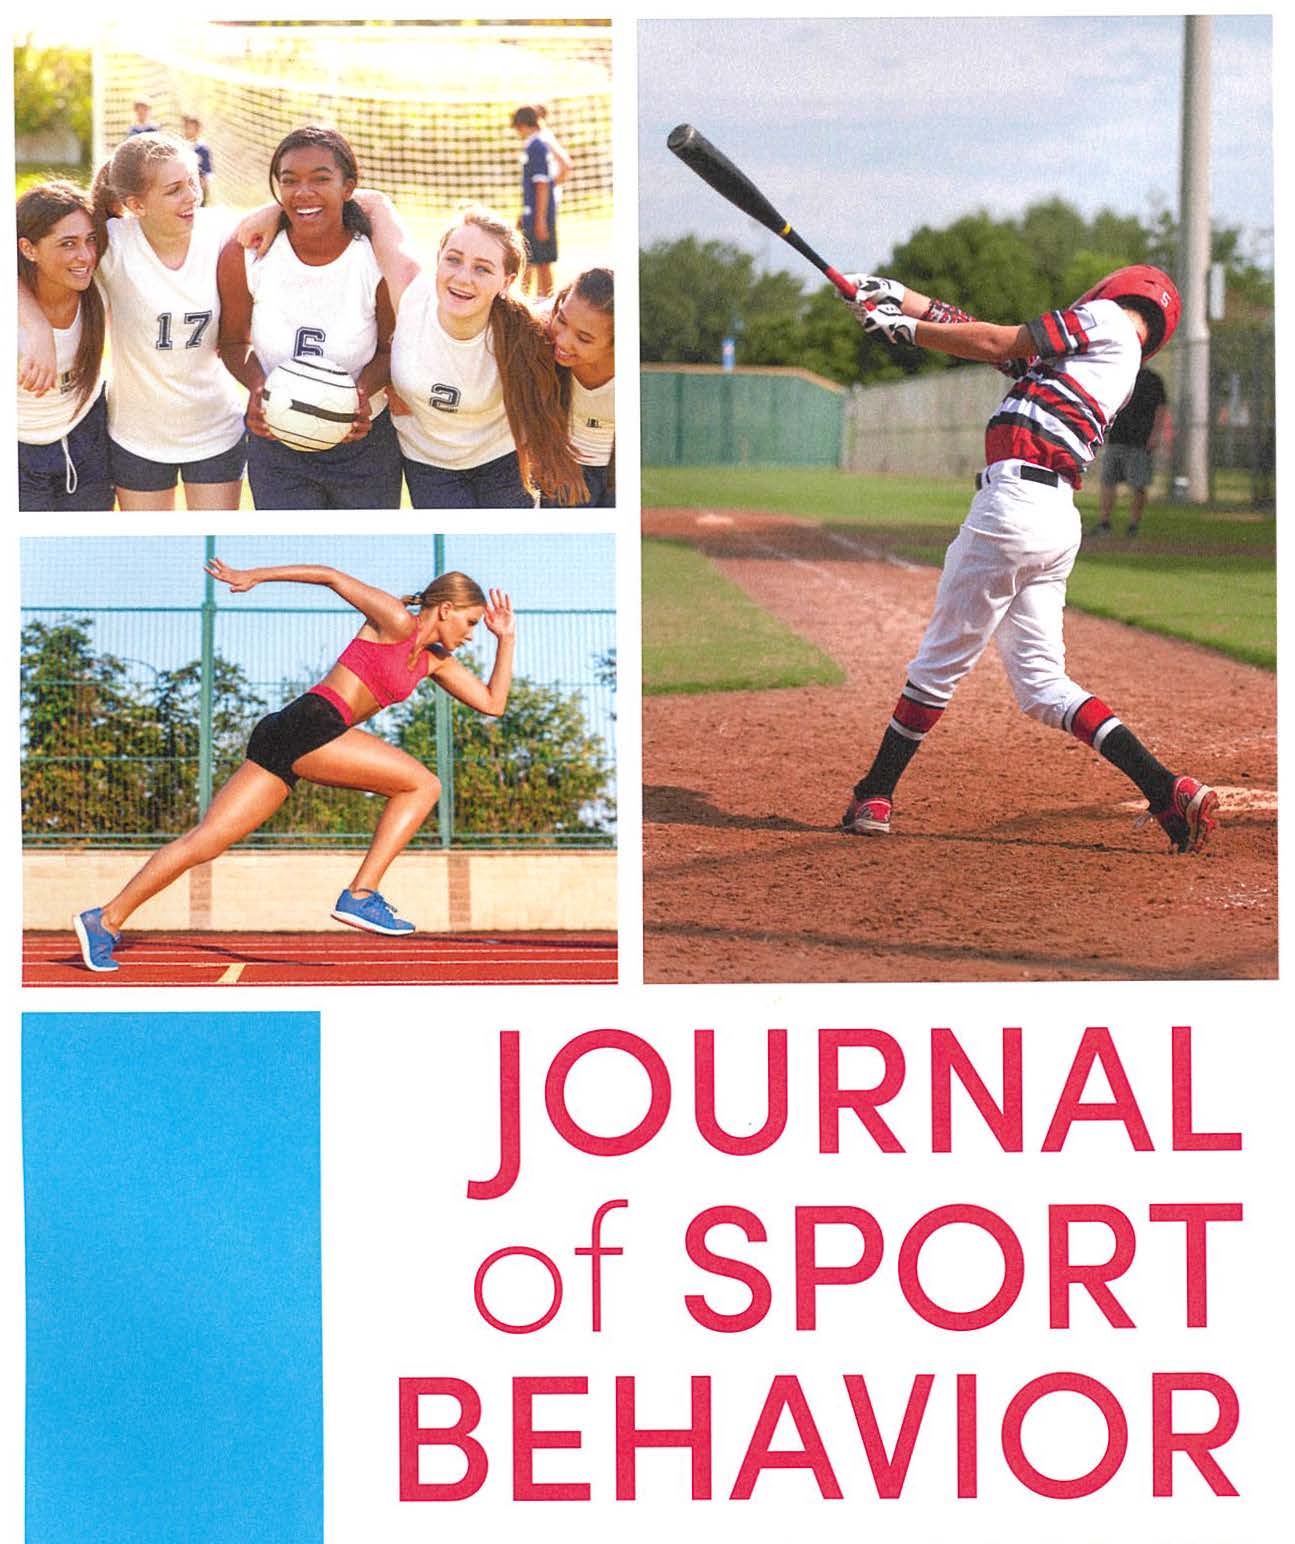 					View Vol. 44 No. 3 (2021): Journal of Sport Behavior
				